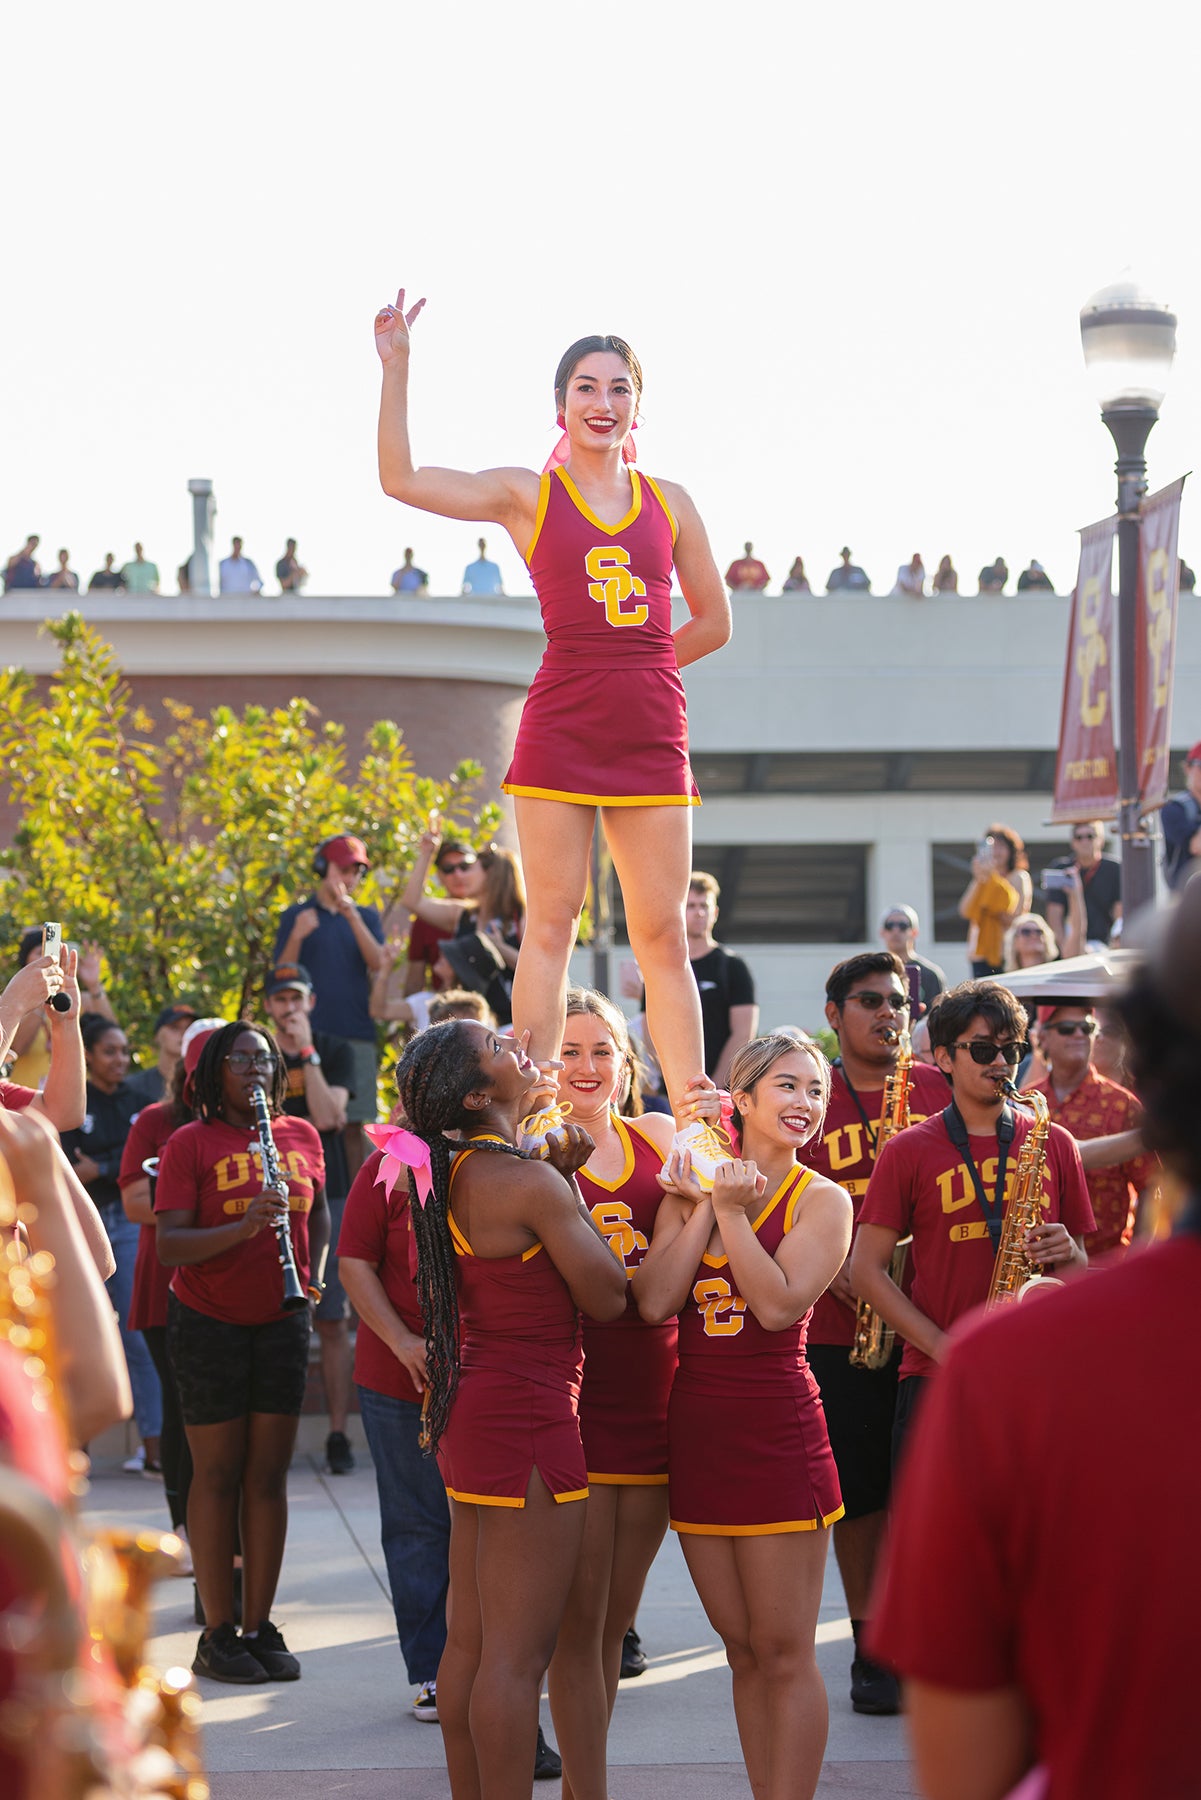 USC cheerleaders at a football rally